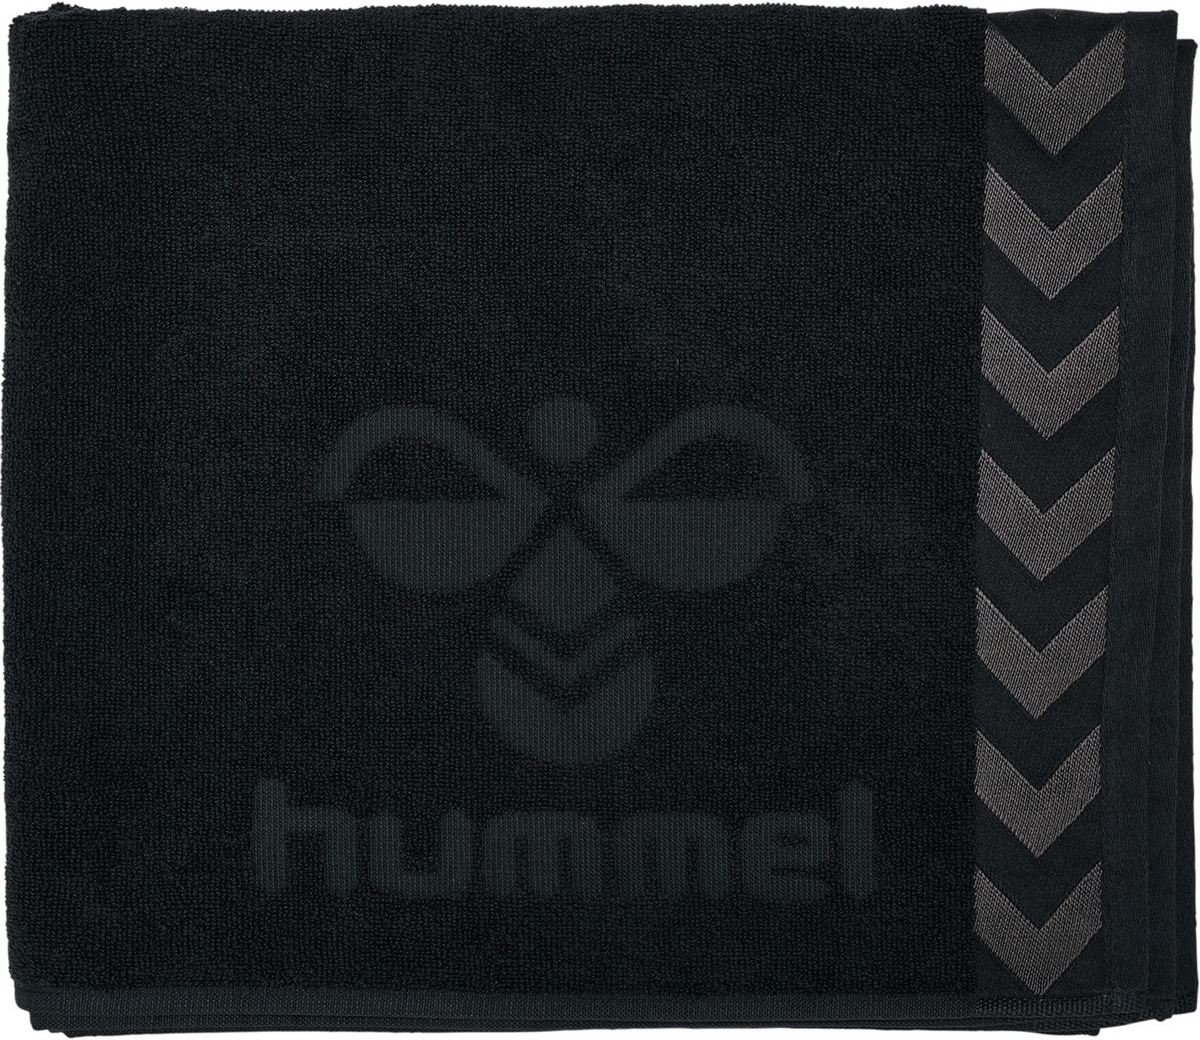 208804-2001_HUMMEL_serviette_SMALL_black (1)